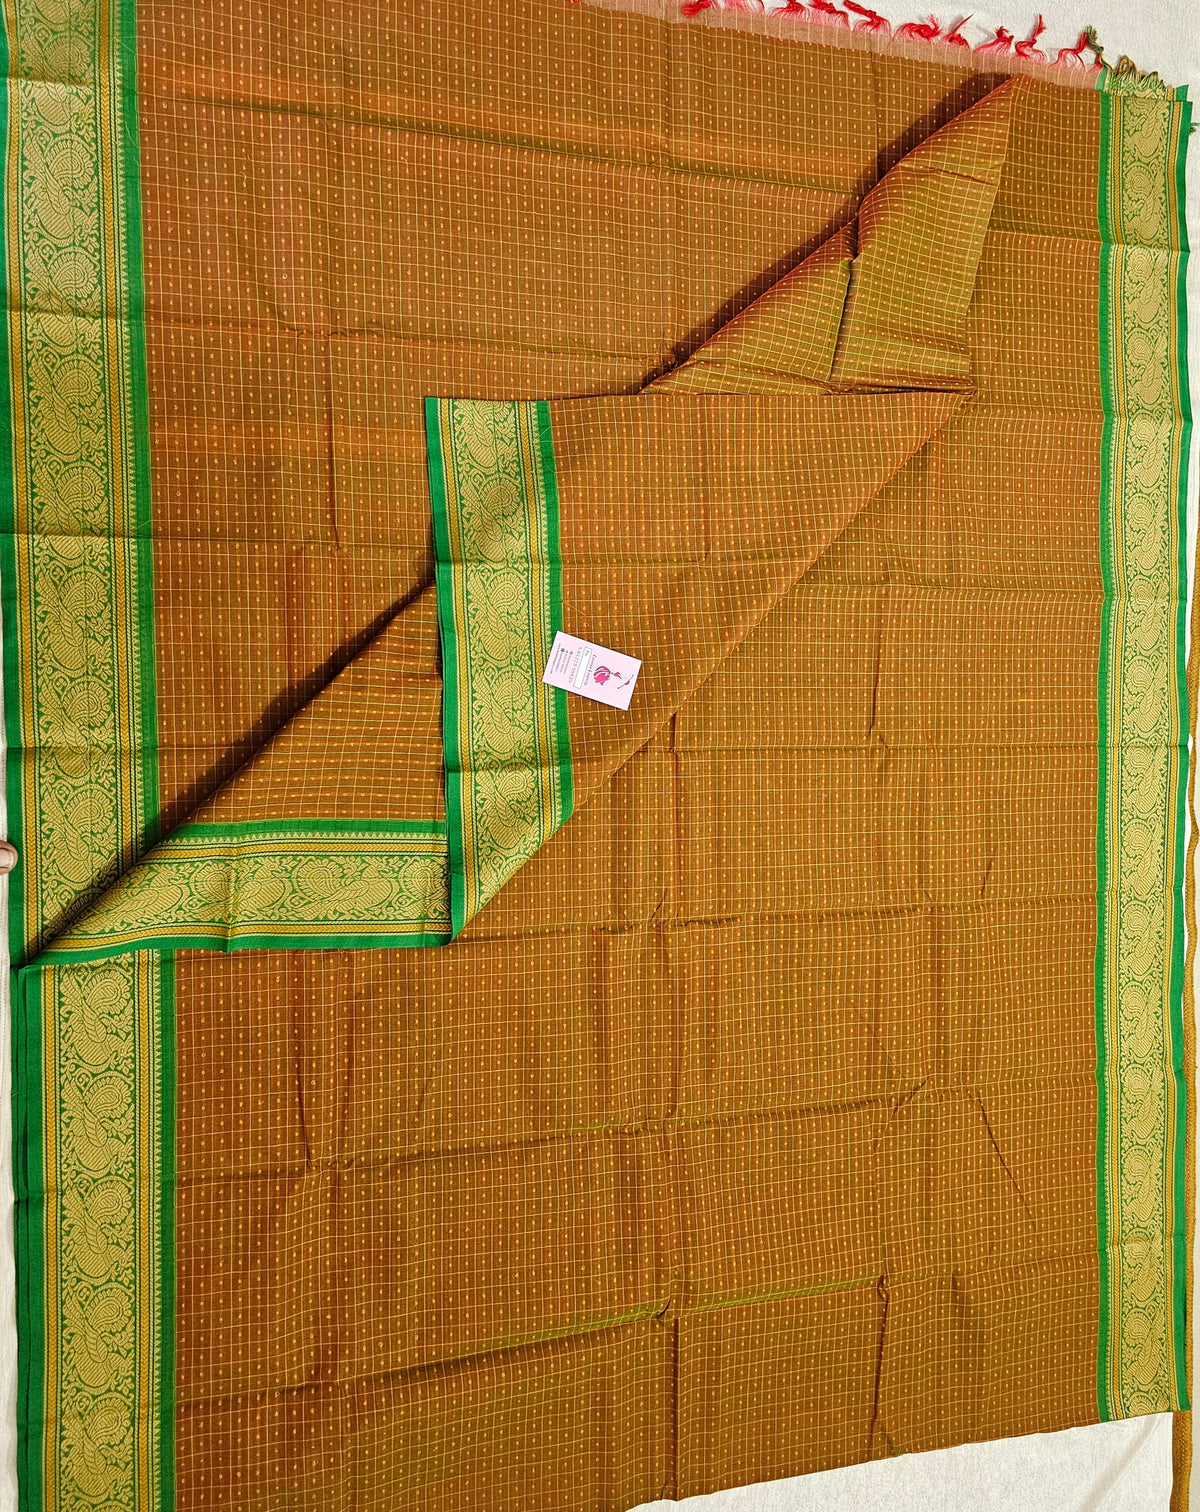 Dual Shade Brown cum Yellow with Green Lakshadeepam Pattern Kanchi Cotton Sarees